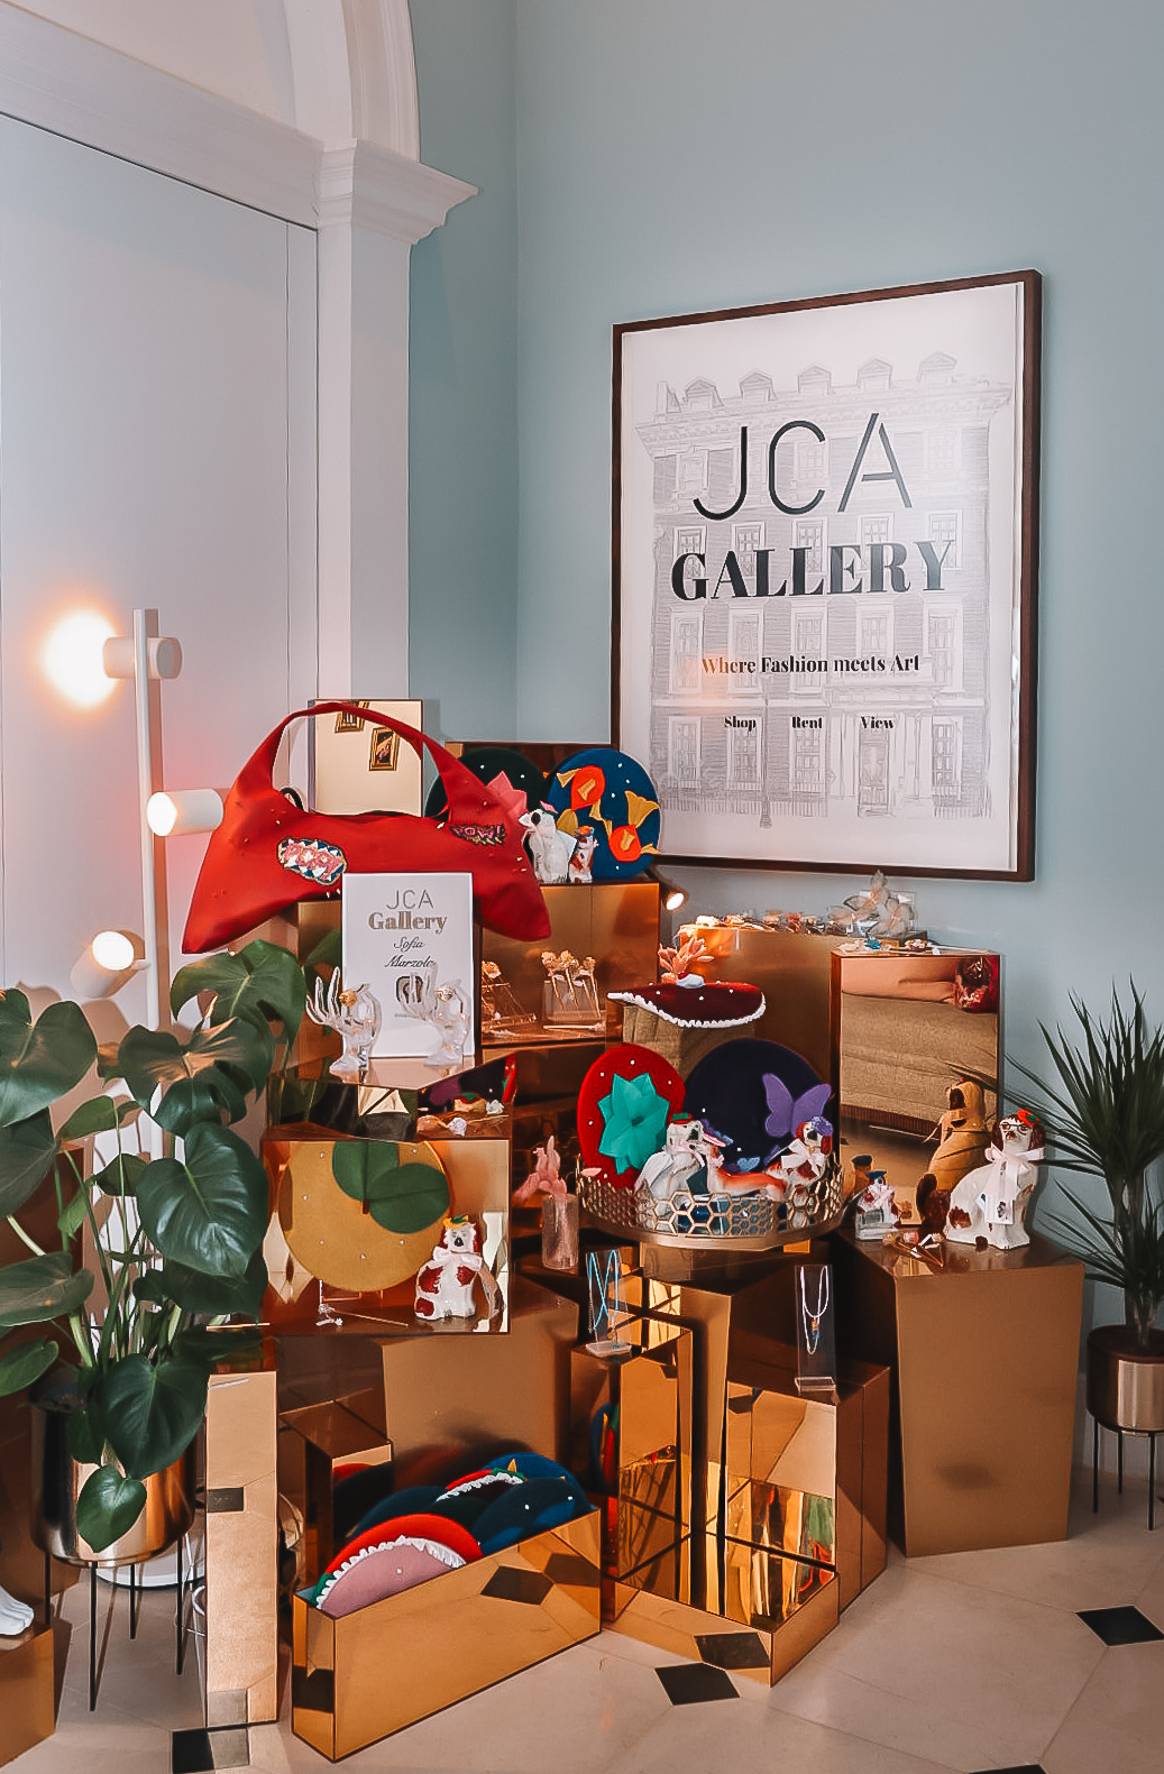 JCA Gallery